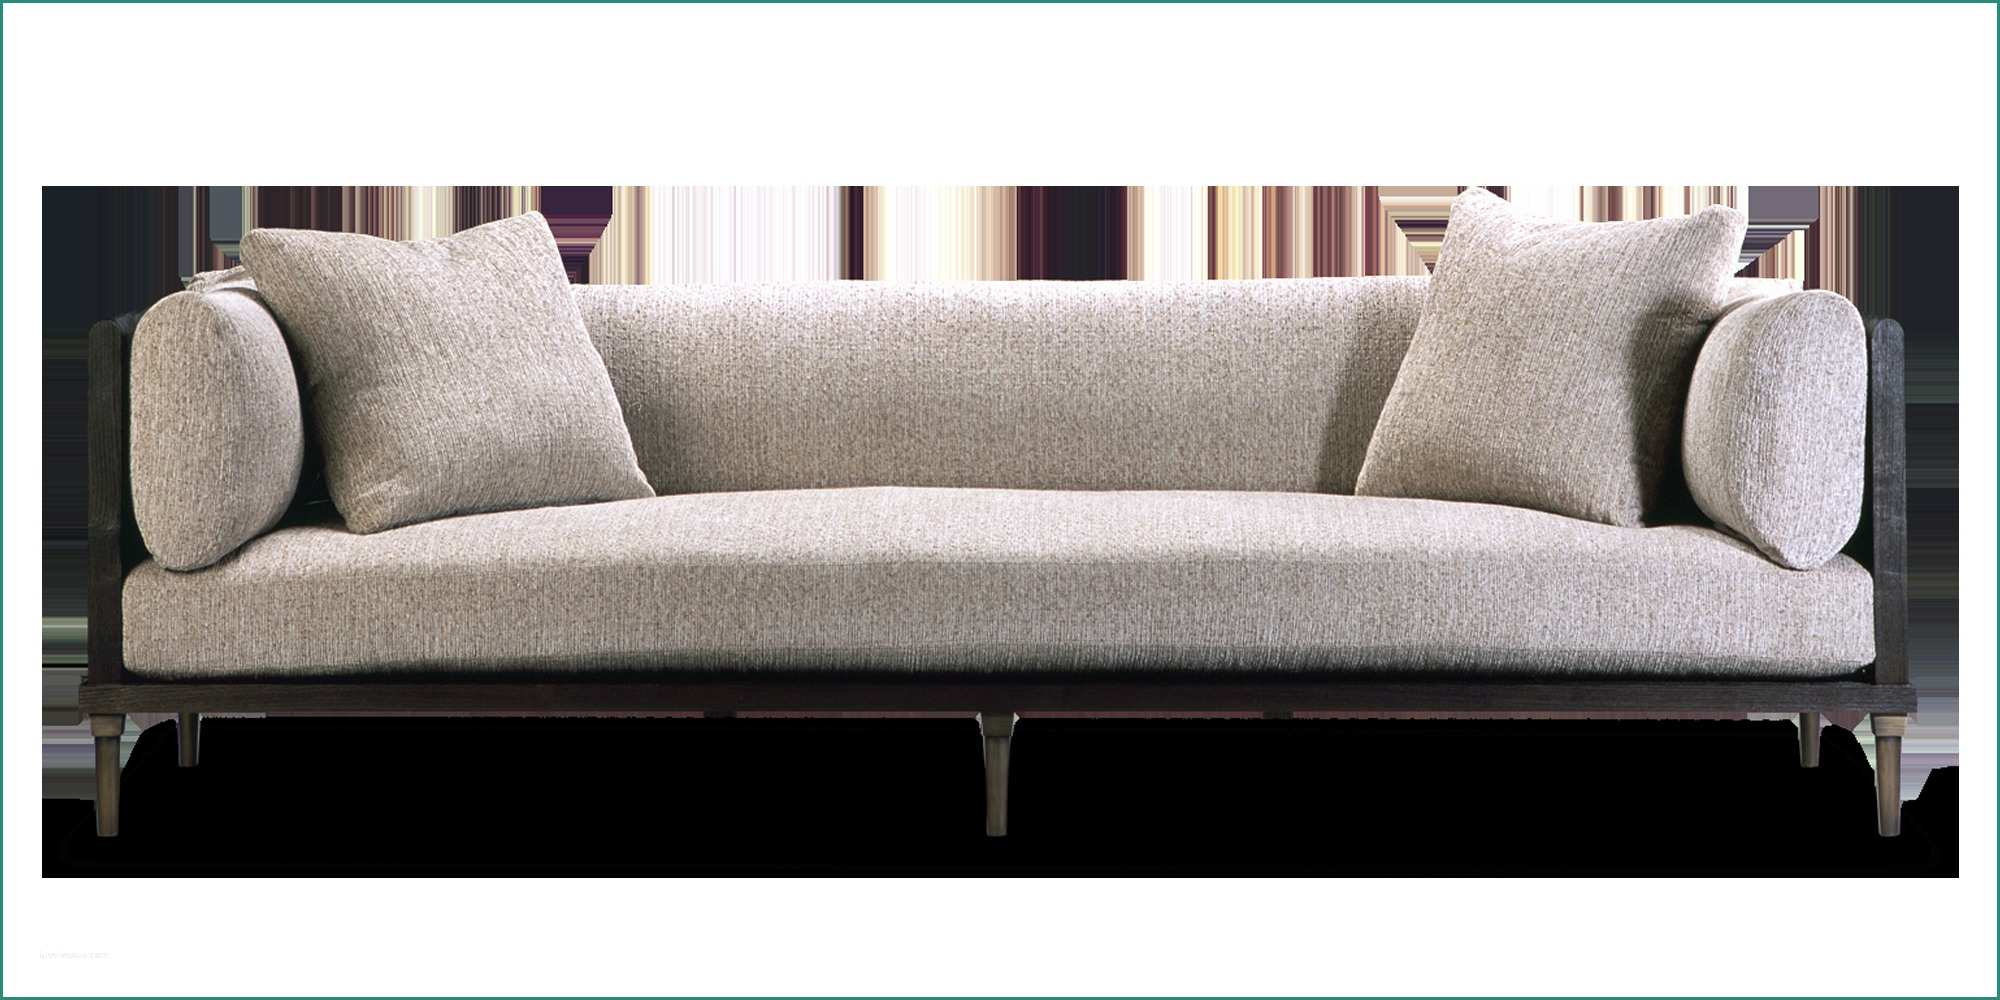 Poltrona Frau Group E Chambord Sectional sofa In Jiun Ho Inc